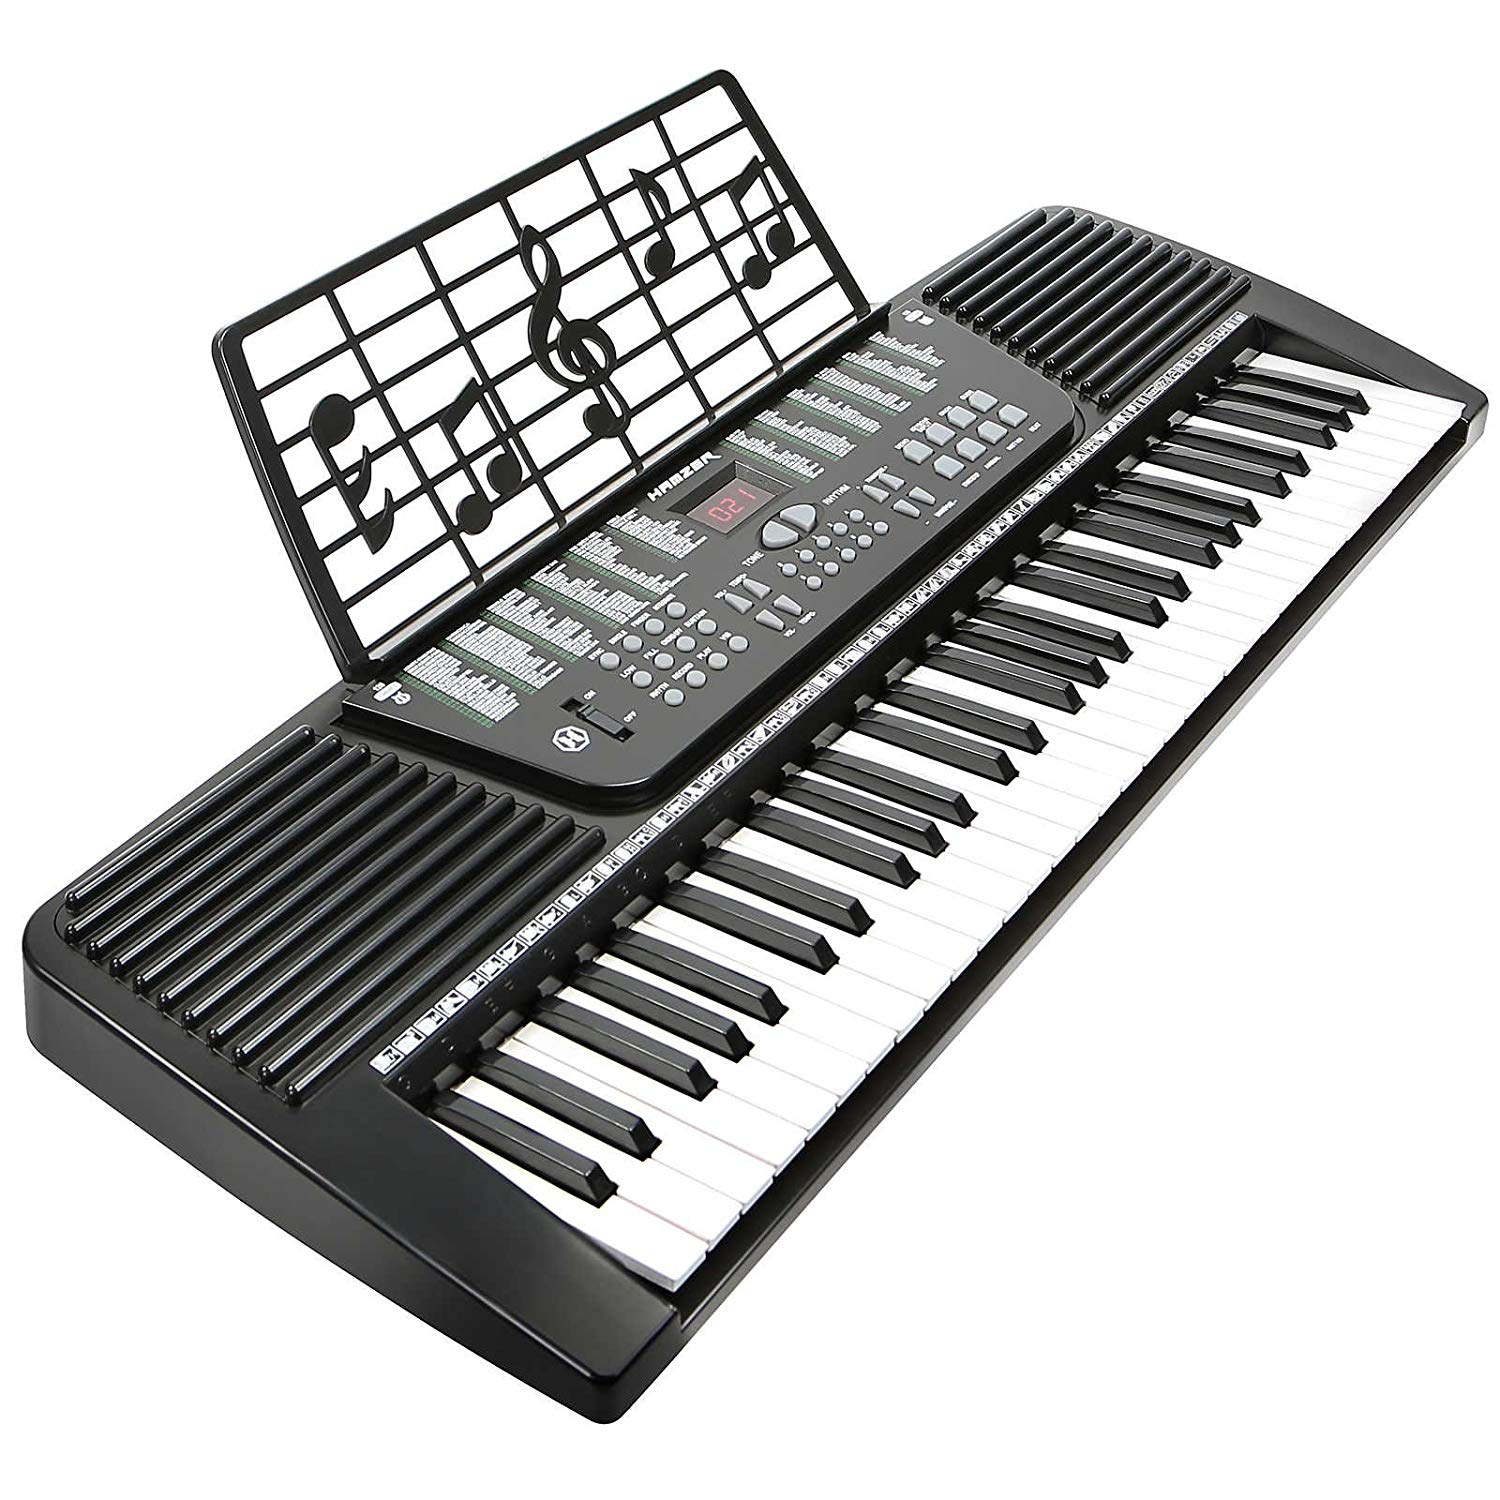 Musical keyboard photo